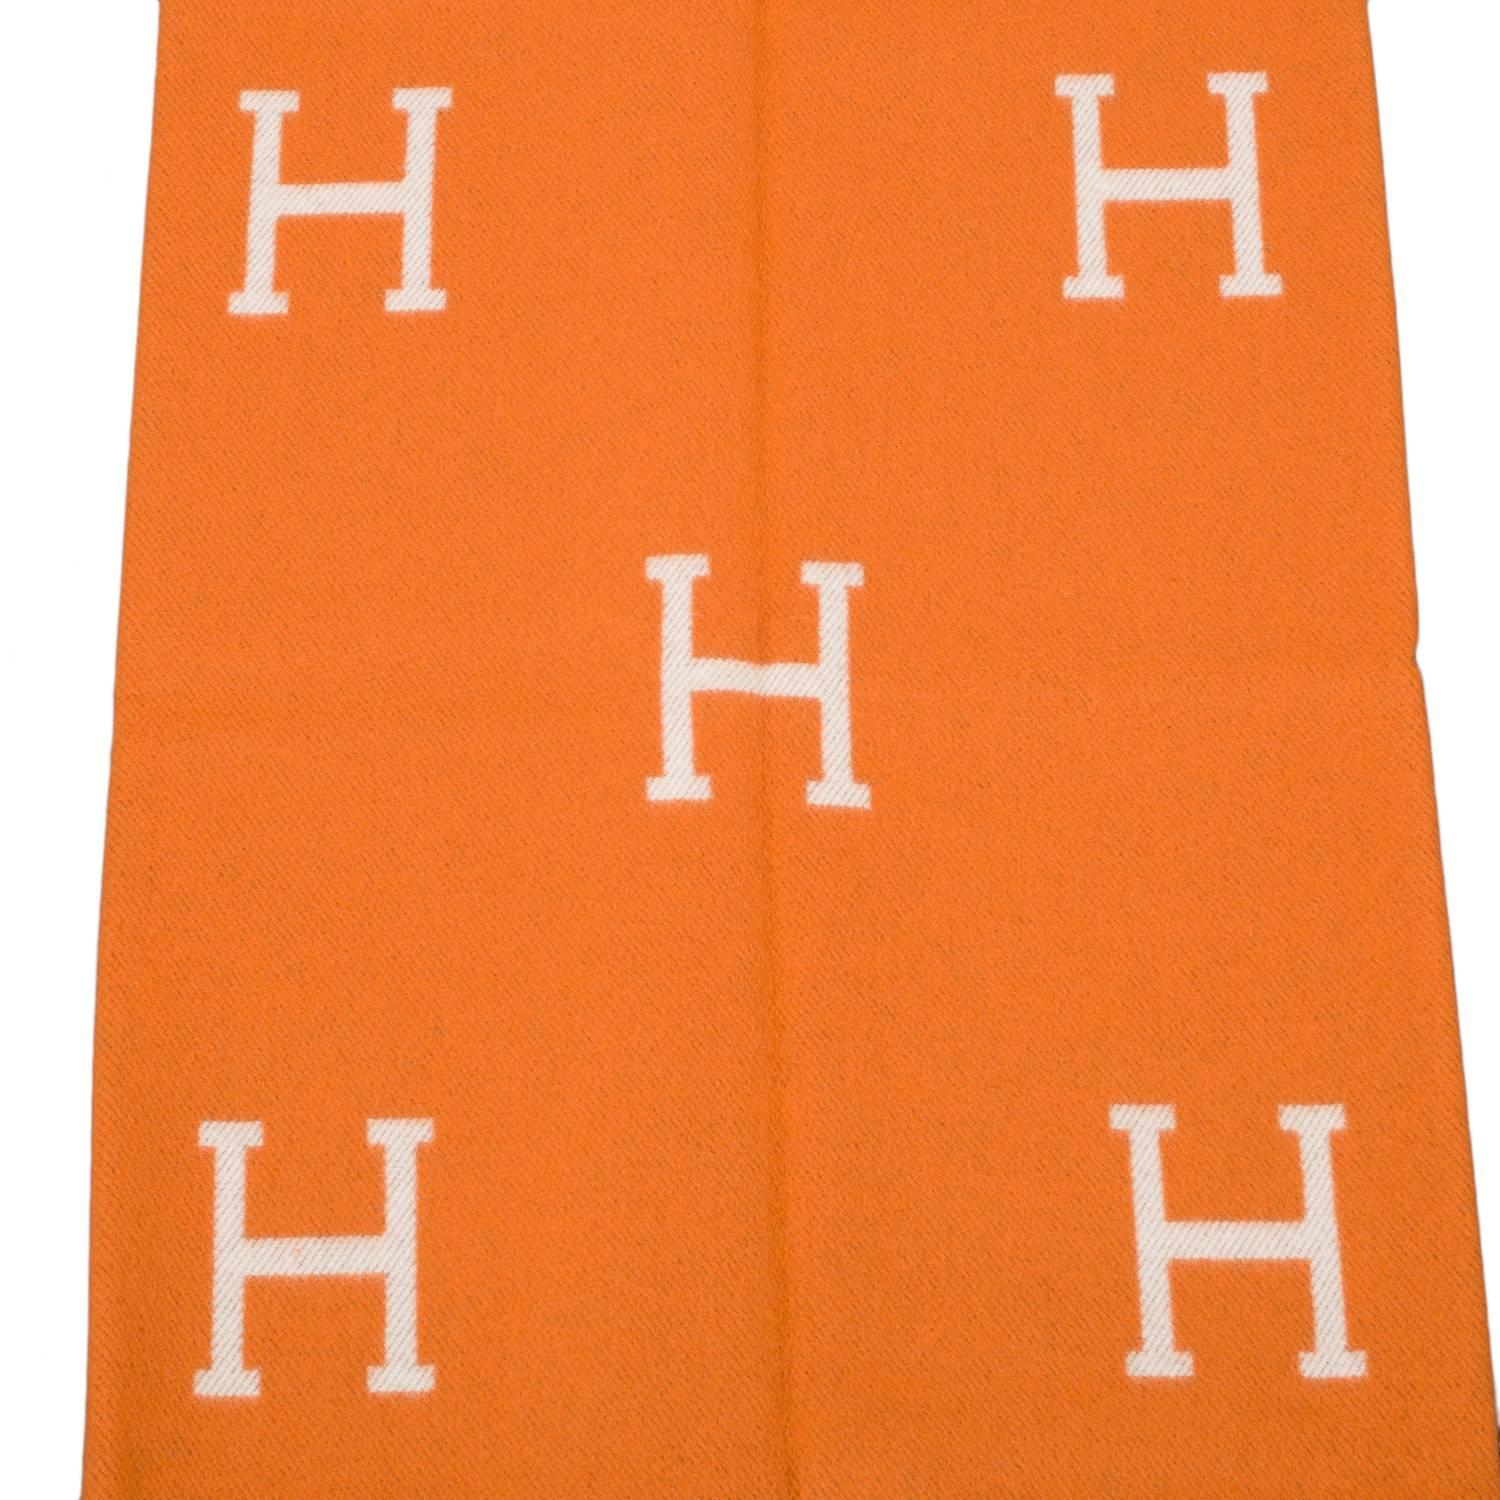 Hermes Avalon Signature H blanket in ecru/pumpkin.

The Avalon Signature H blanket is made of 85% wool, 15% cashmere.

The blanket measures 55